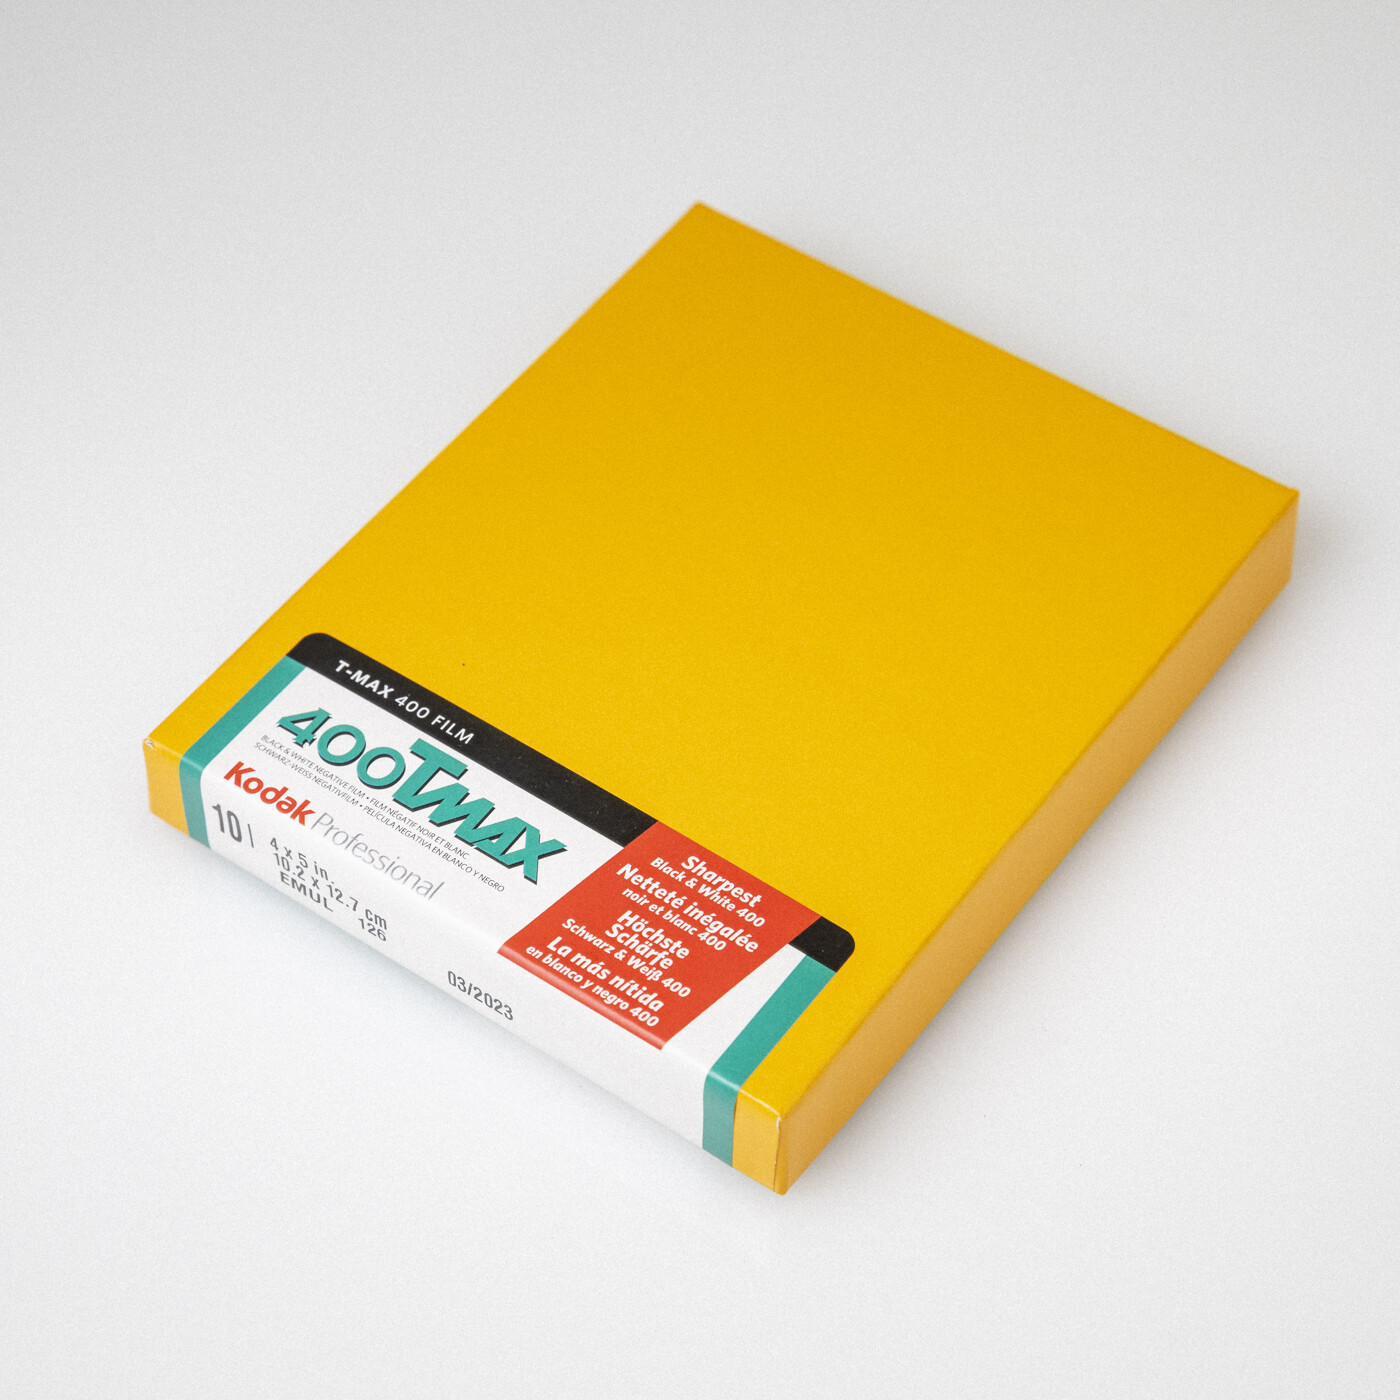 Expired 3/23 - Kodak TMAX 400 4x5 [10 sheets]